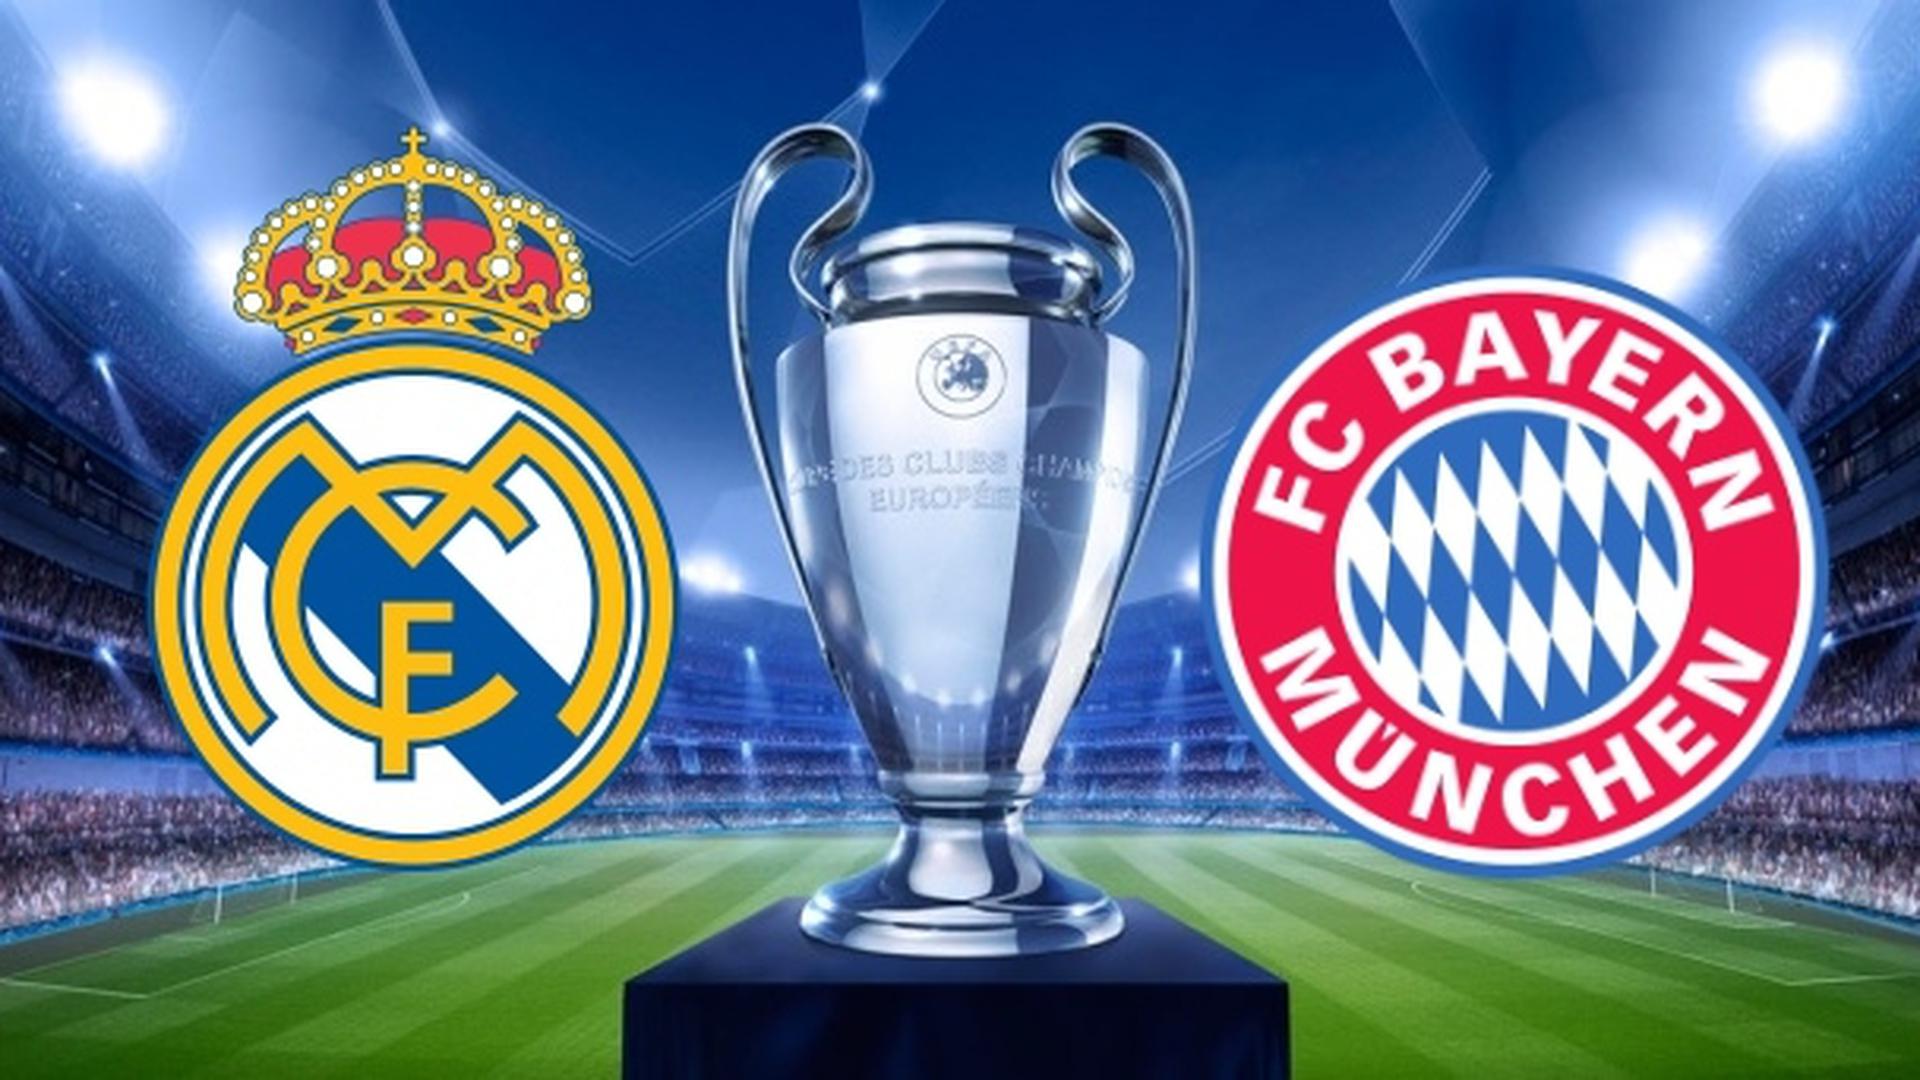 Bayern Munich - Real Madrid, ce sera le grand choc des demi-finales de la Ligue des champions